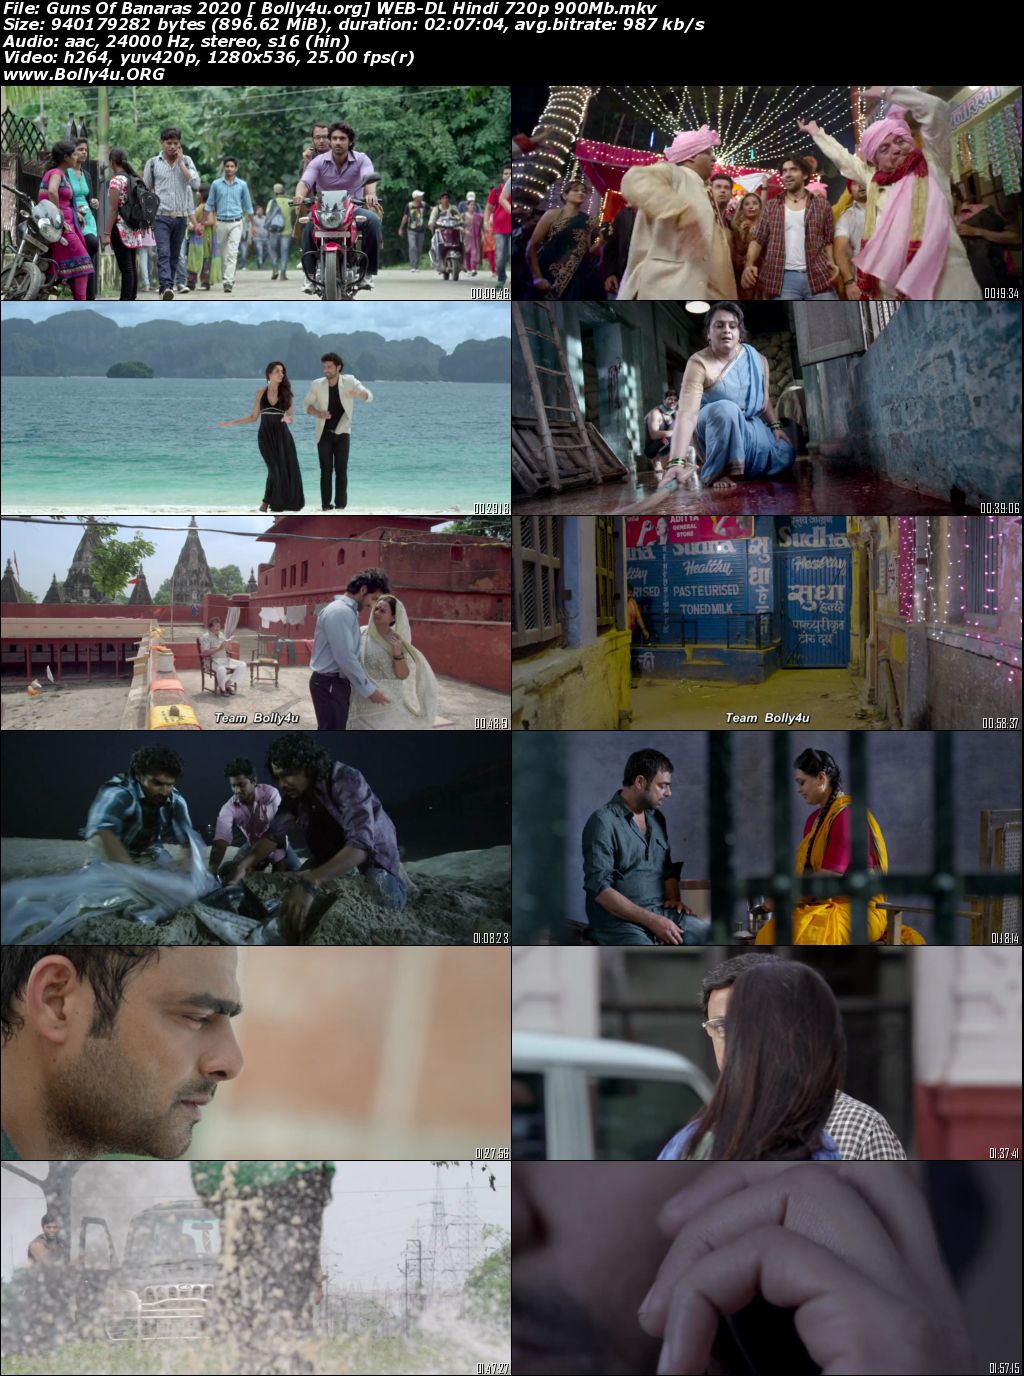 Guns Of Banaras 2020 WEB-DL 900Mb Hindi Movie Download 720p